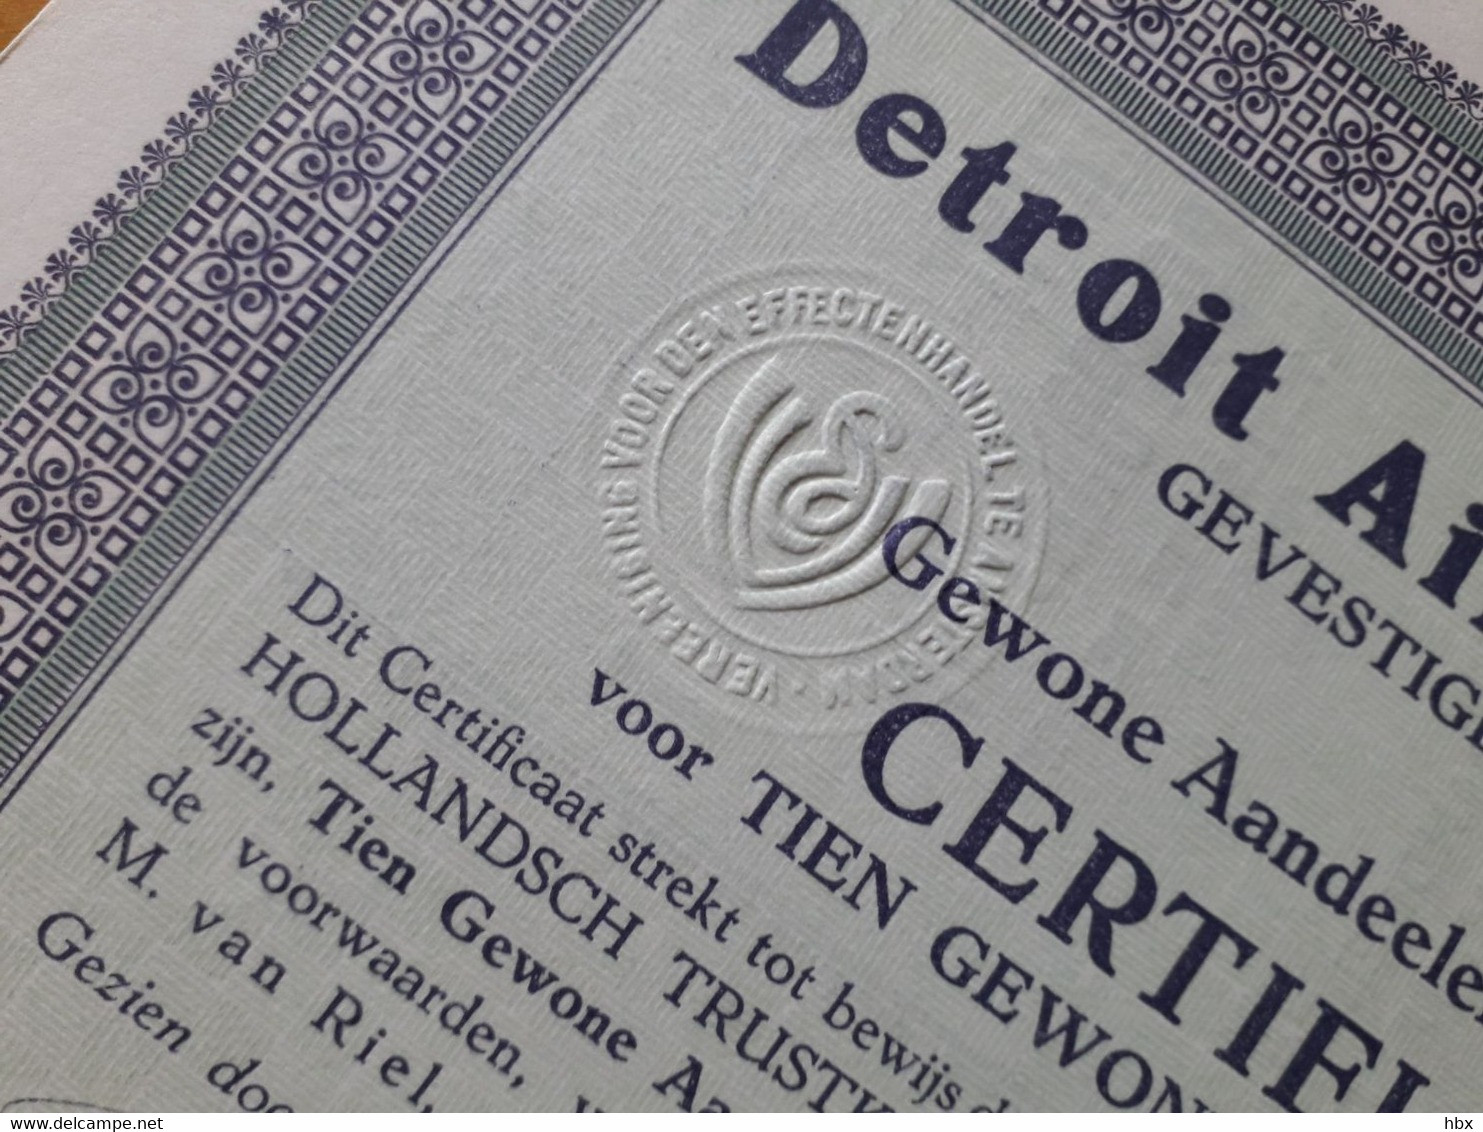 Detroit Aircraft Corporation - 1931 - Aviazione